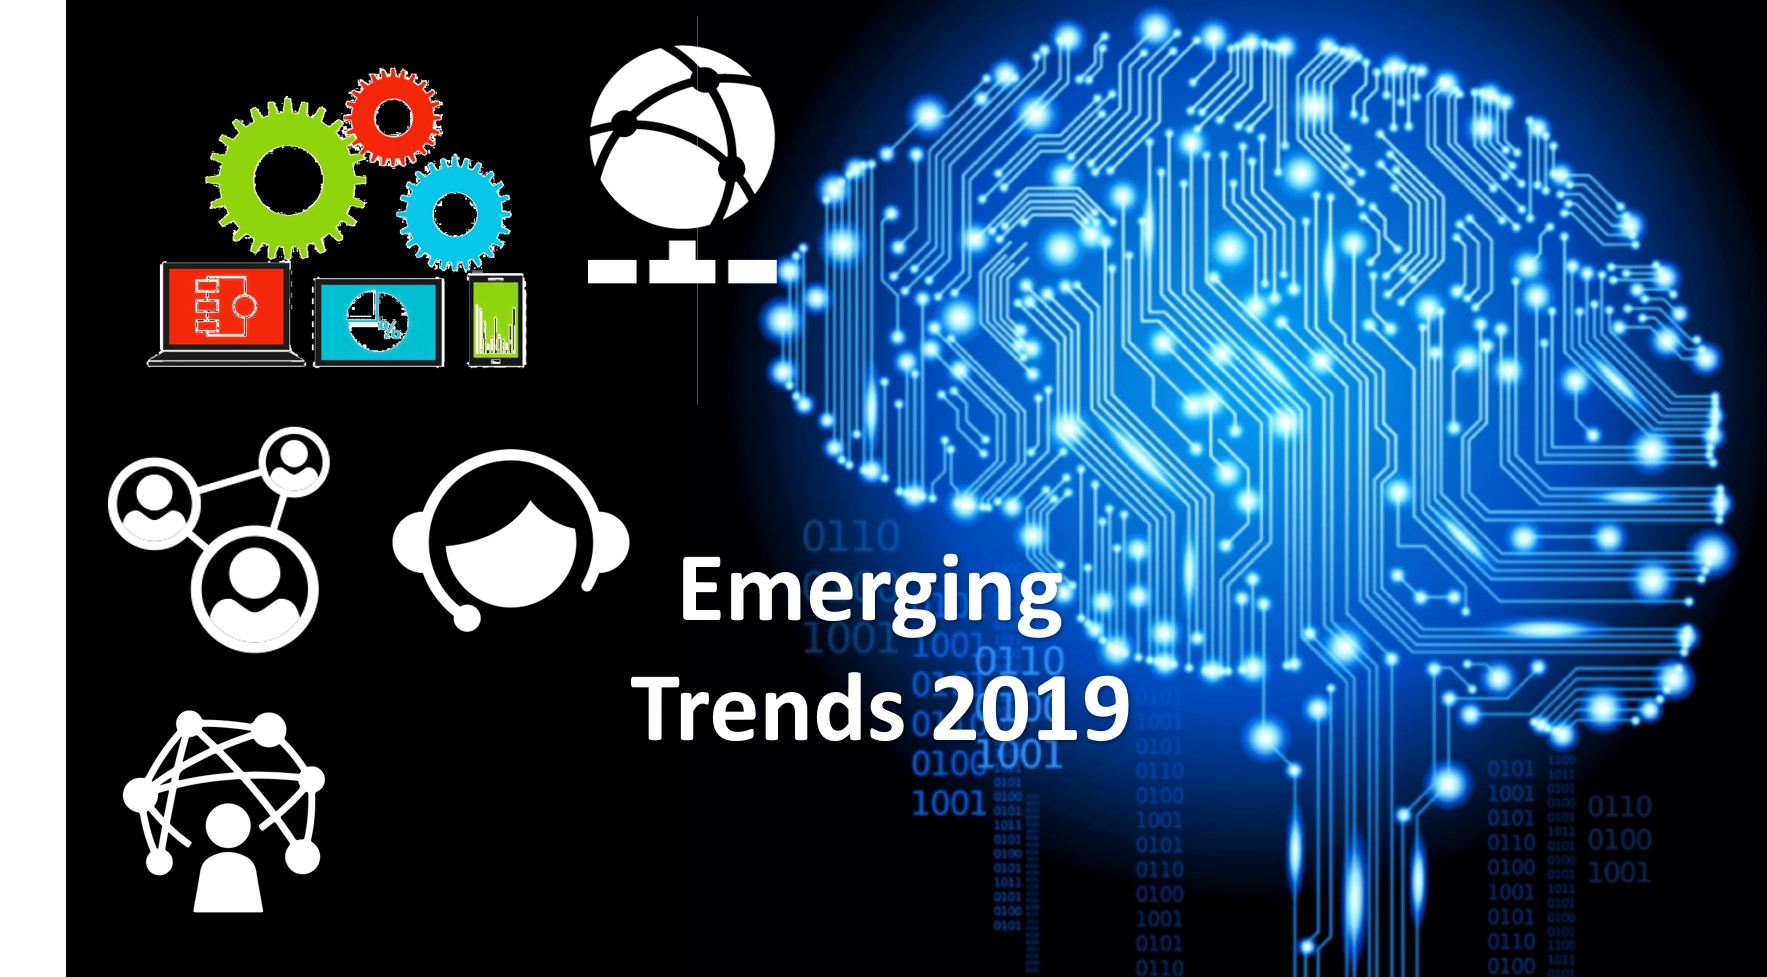 The top ten emerging technology trends in 2019